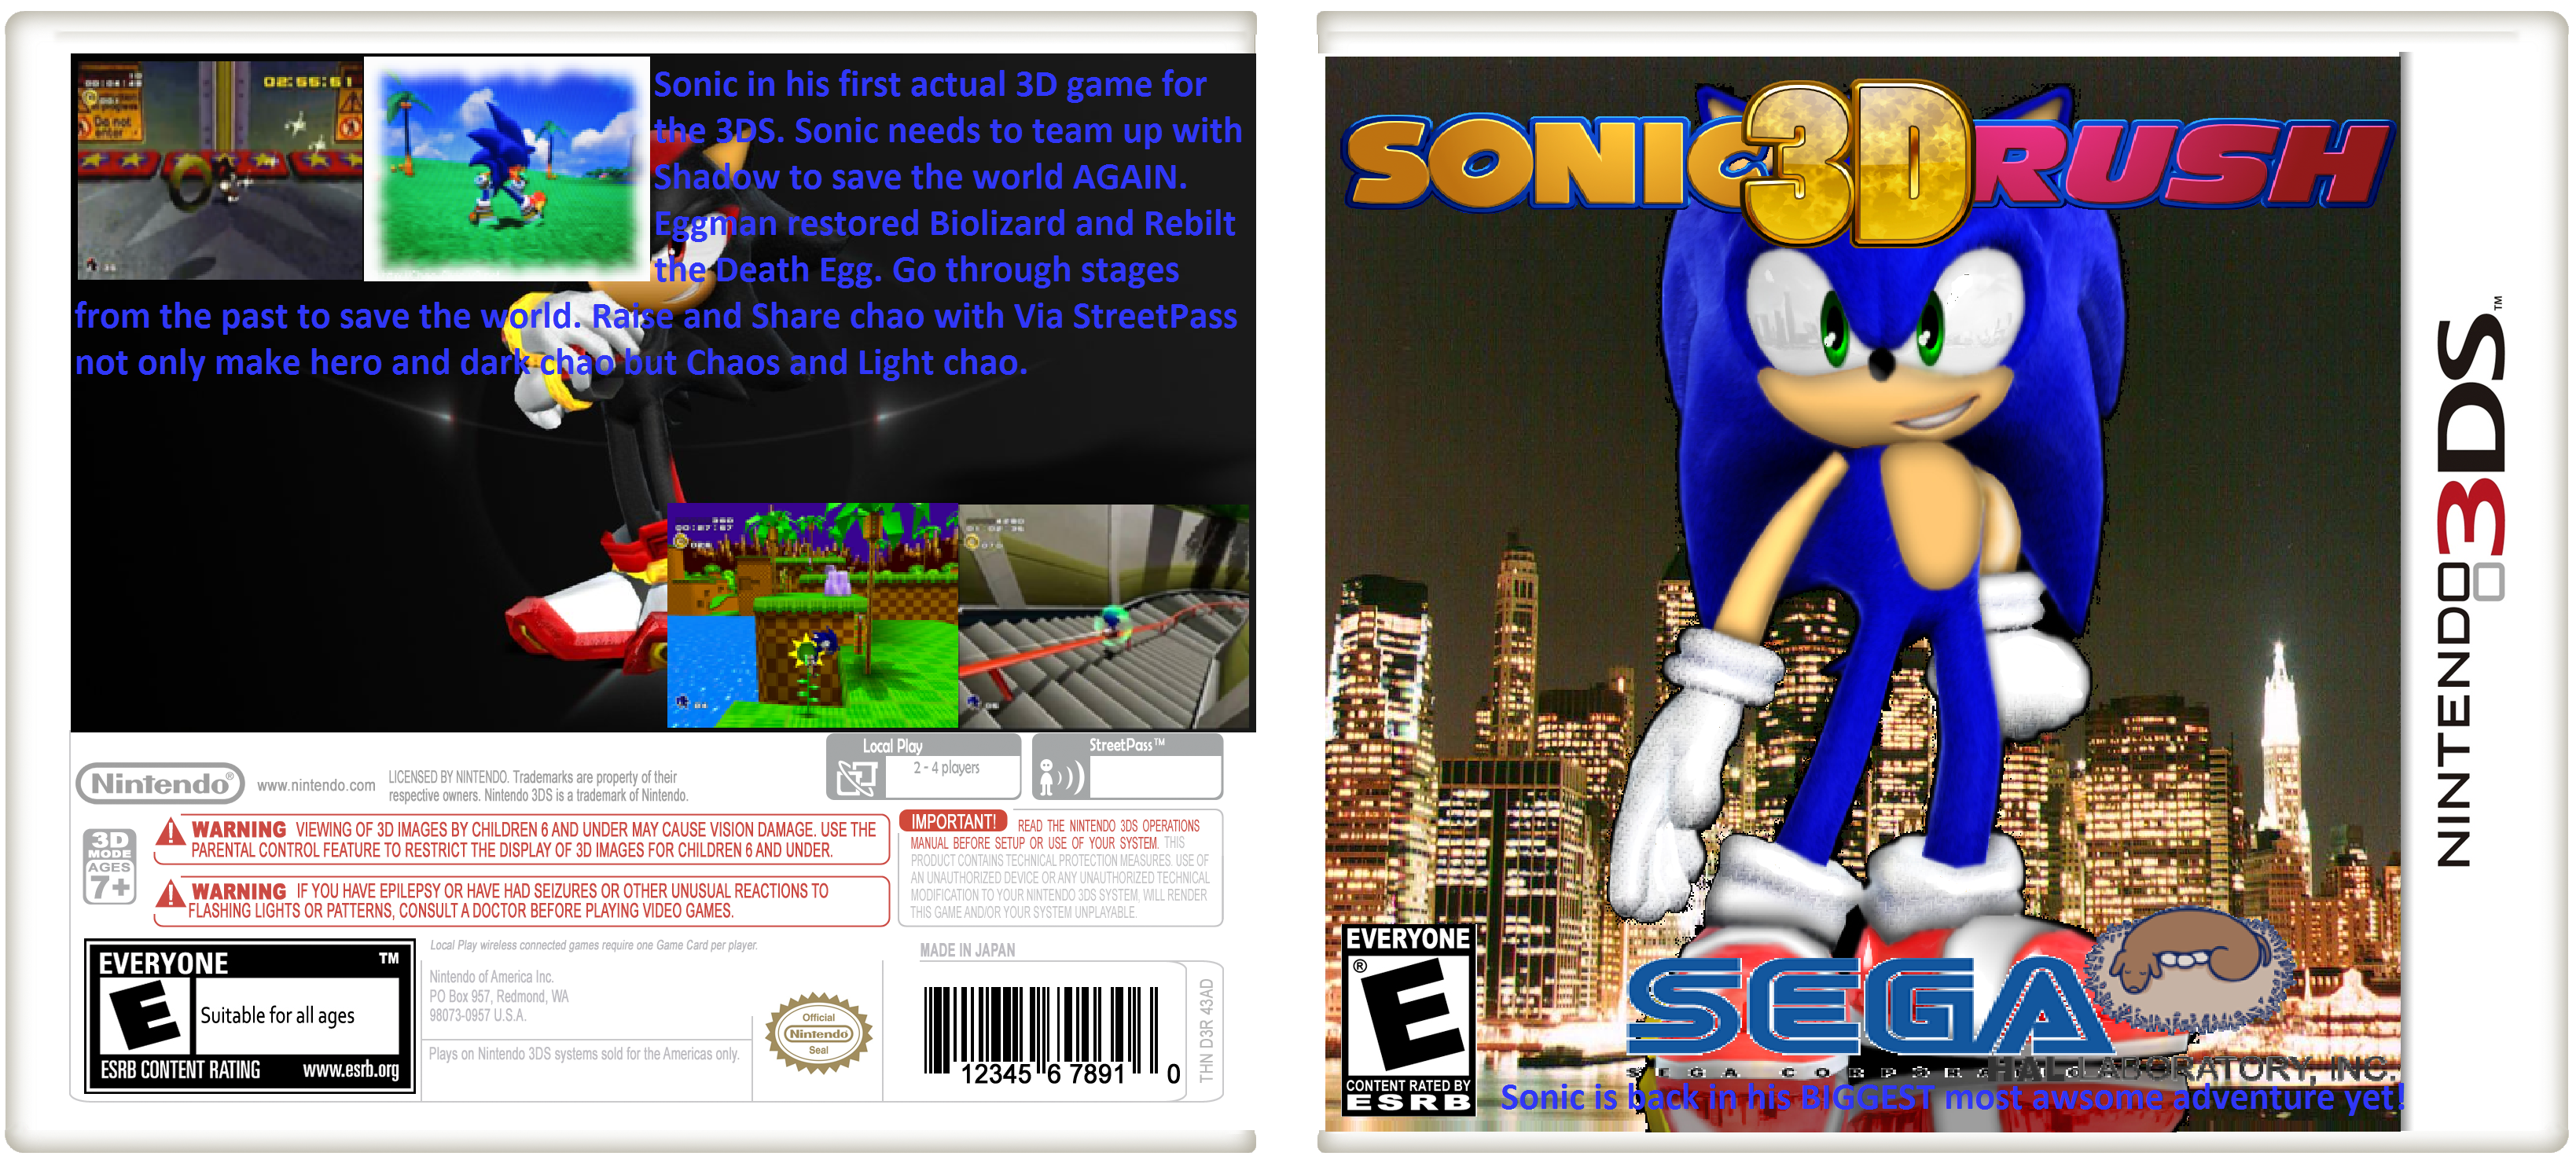 Sonic 3D Rush box cover